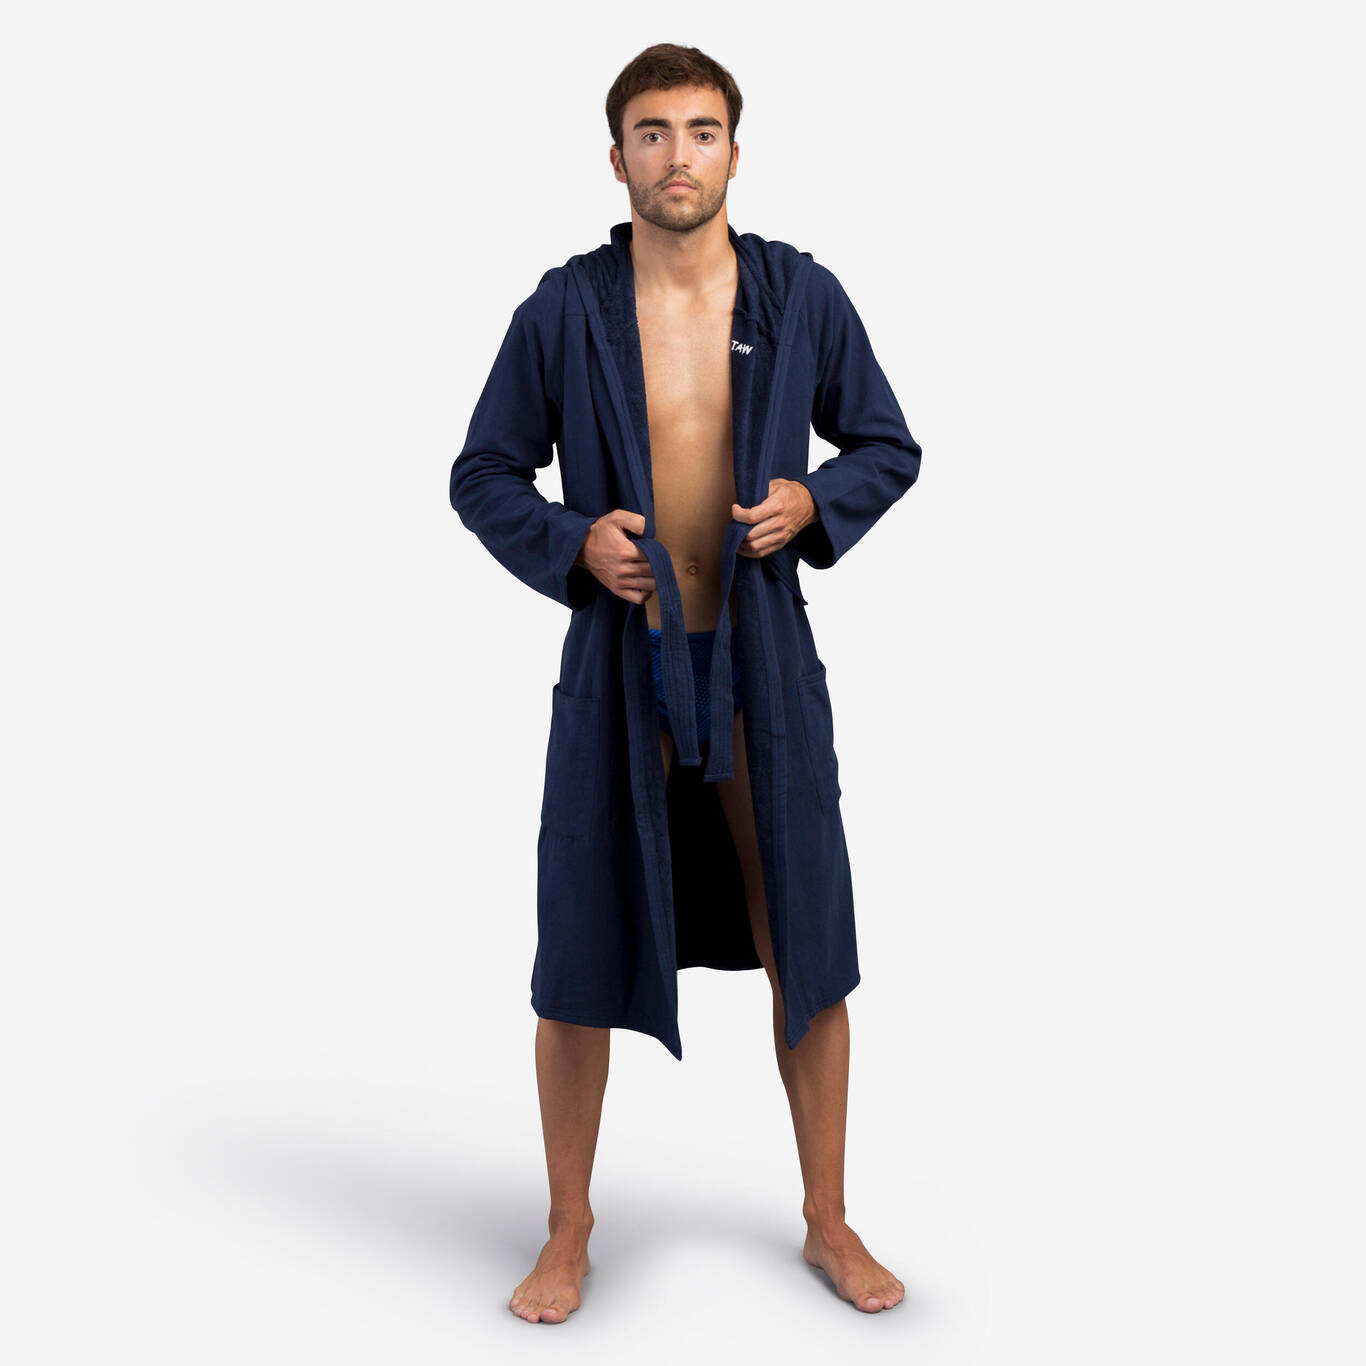 Men's organic cotton pool bathrobe - dark blue